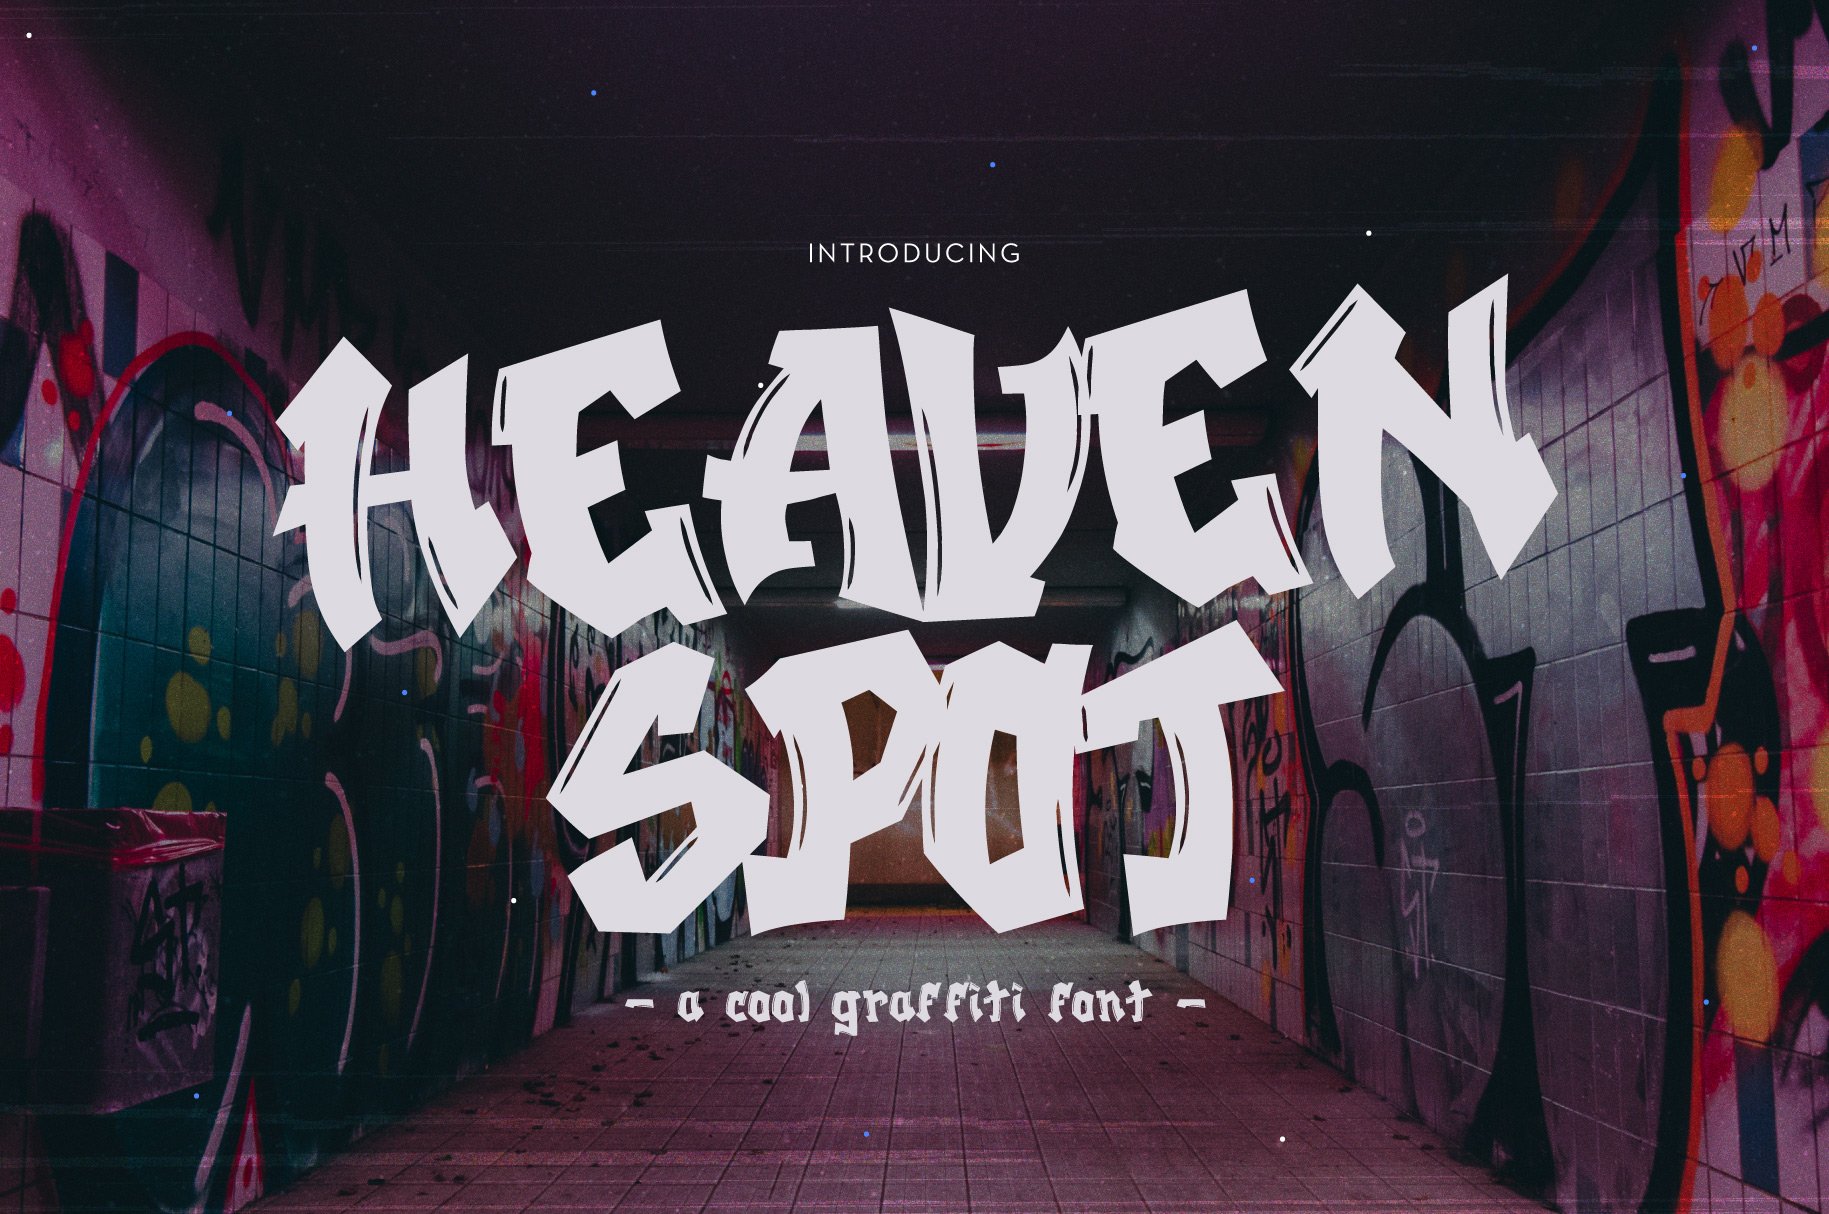 Heaven Spot - Rad Graffiti Display cover image.